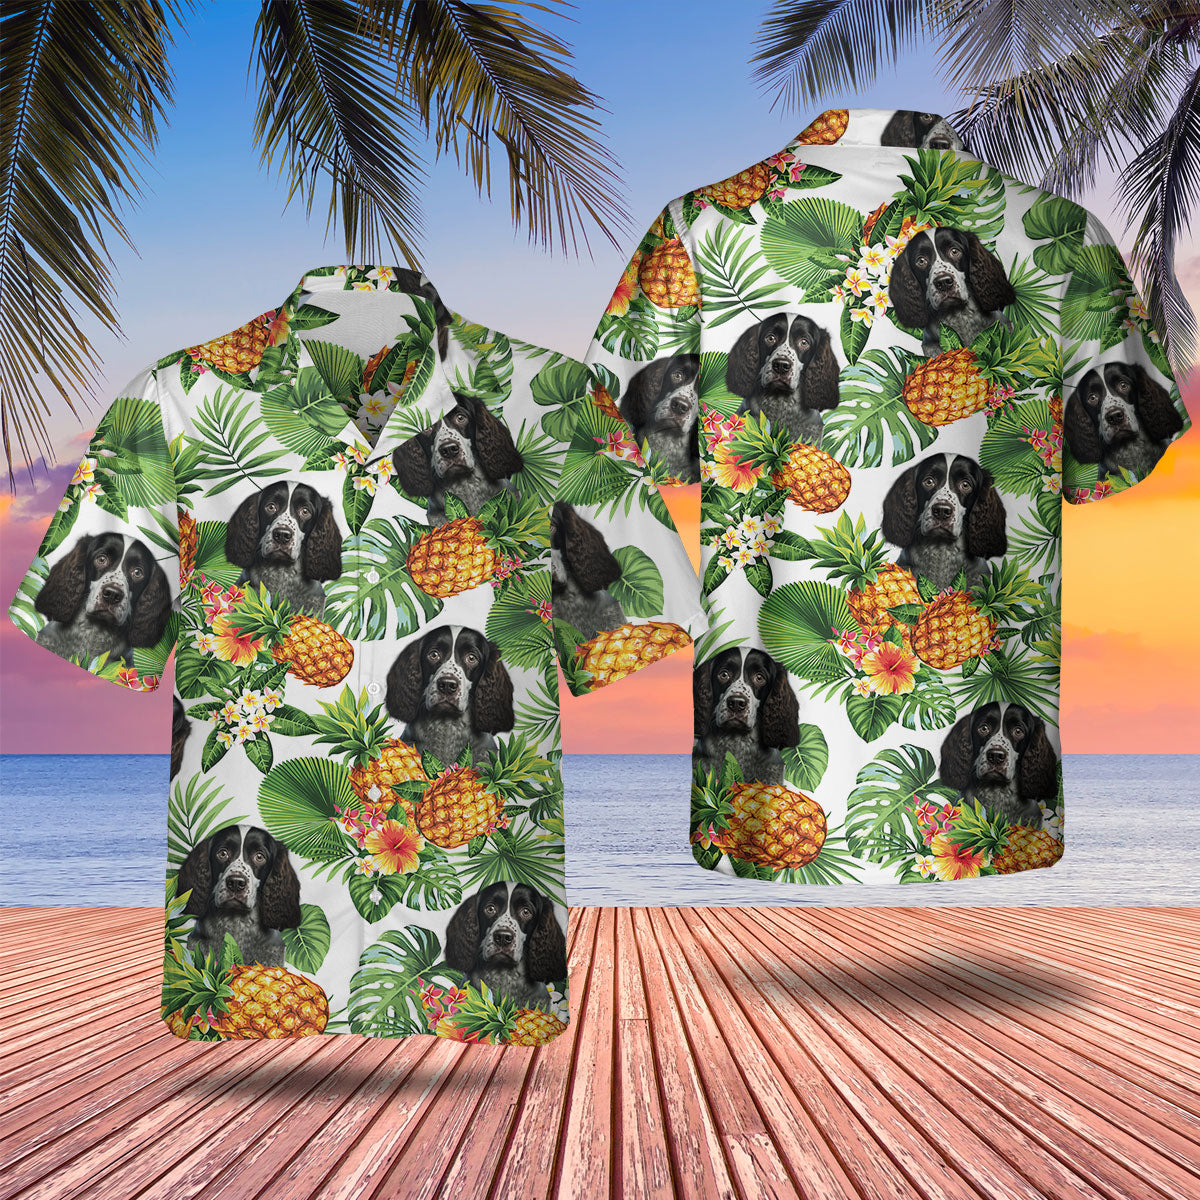 English Springer Spaniel AI - Tropical Pattern Hawaiian Shirt